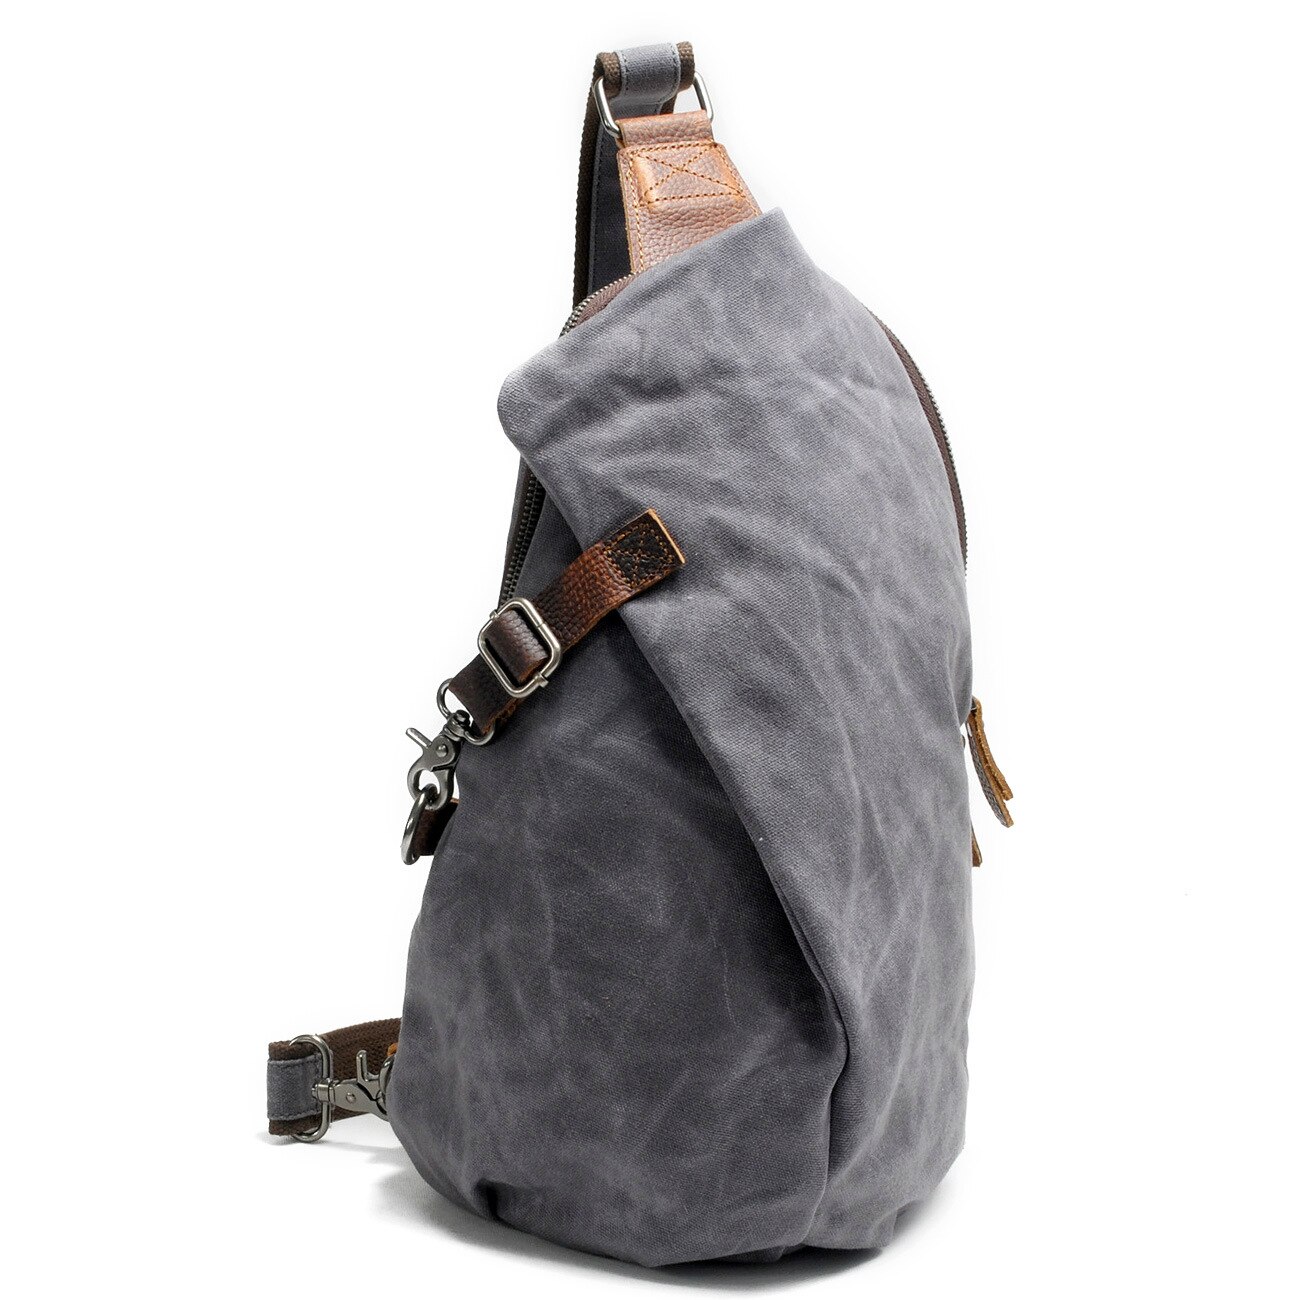 waterproof batik chest bag retro male canvas shoulder diagonal bag casual handbag dumpling bag: DarkGrey